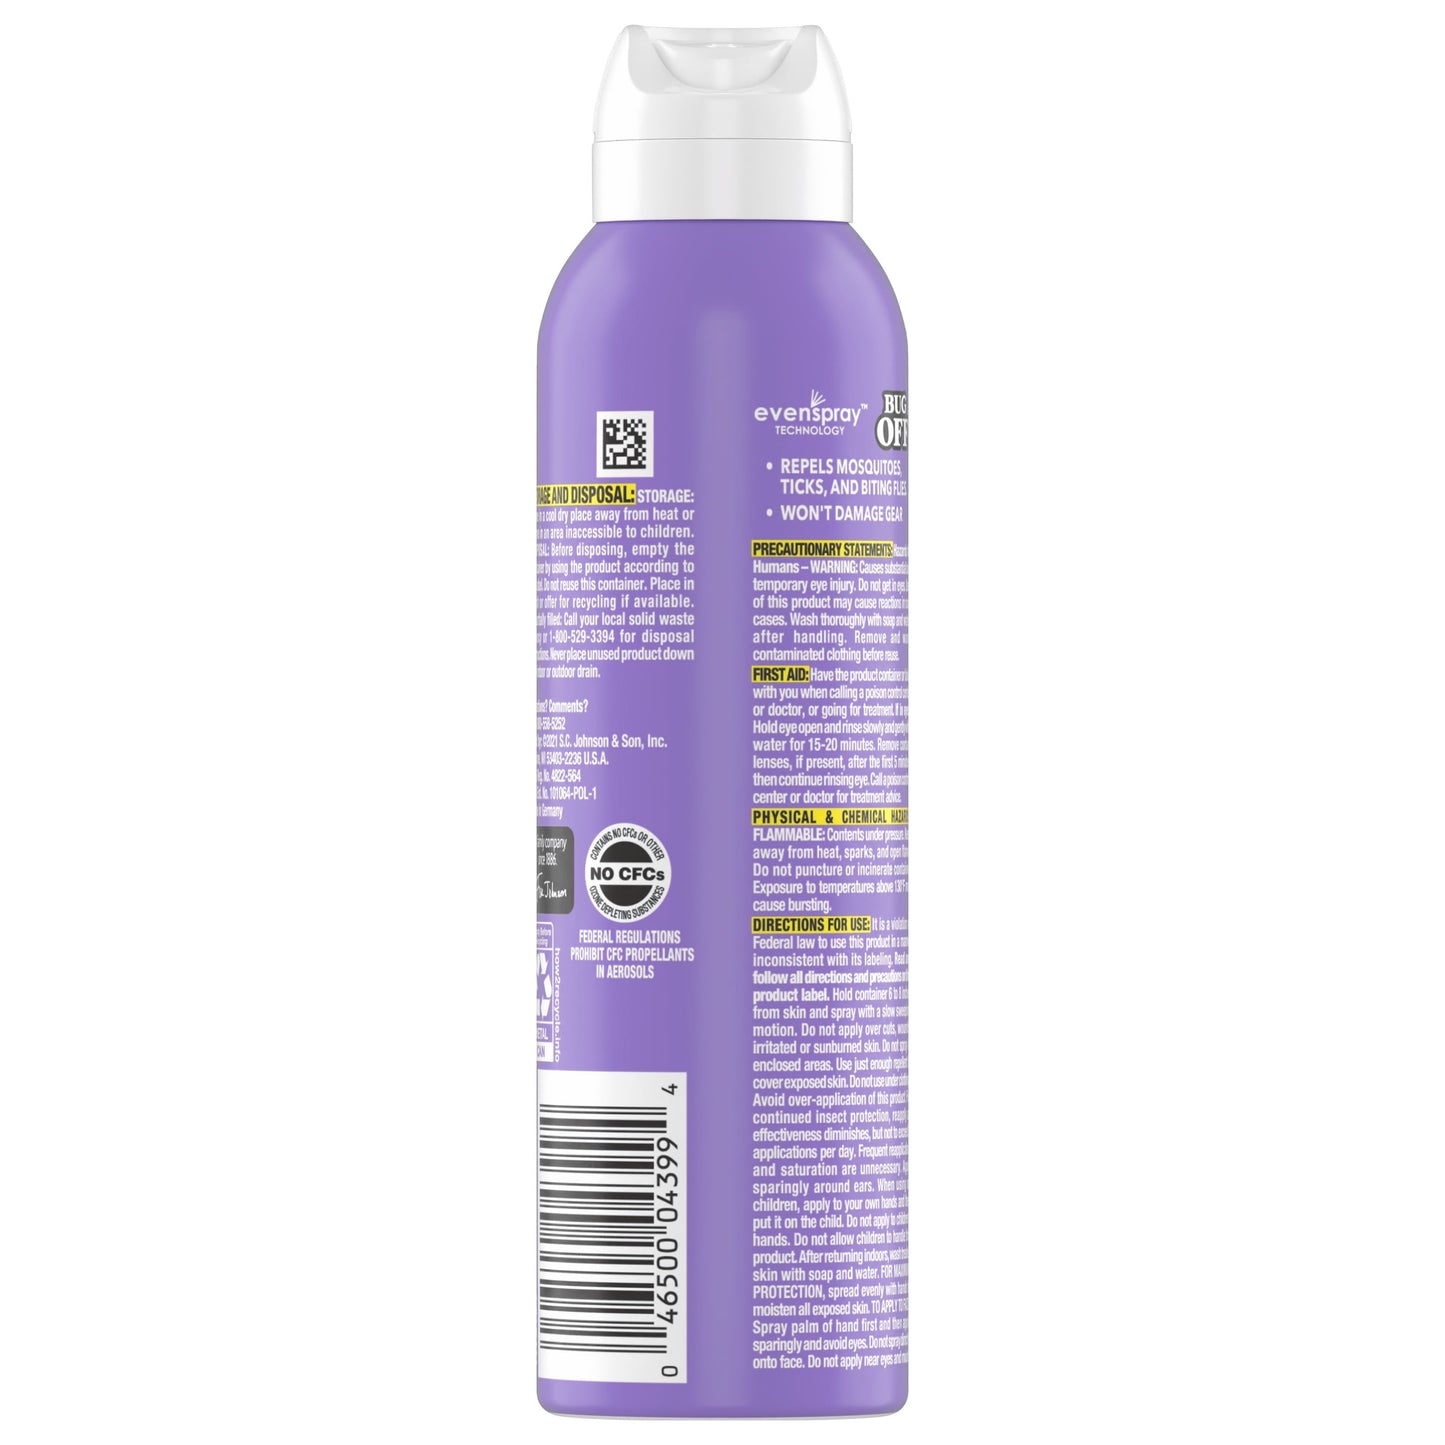 OFF! Clean Feel Picaridin Insect Repellent Aerosol, OFF!® Bug Spray, 5 fl oz (142 g)